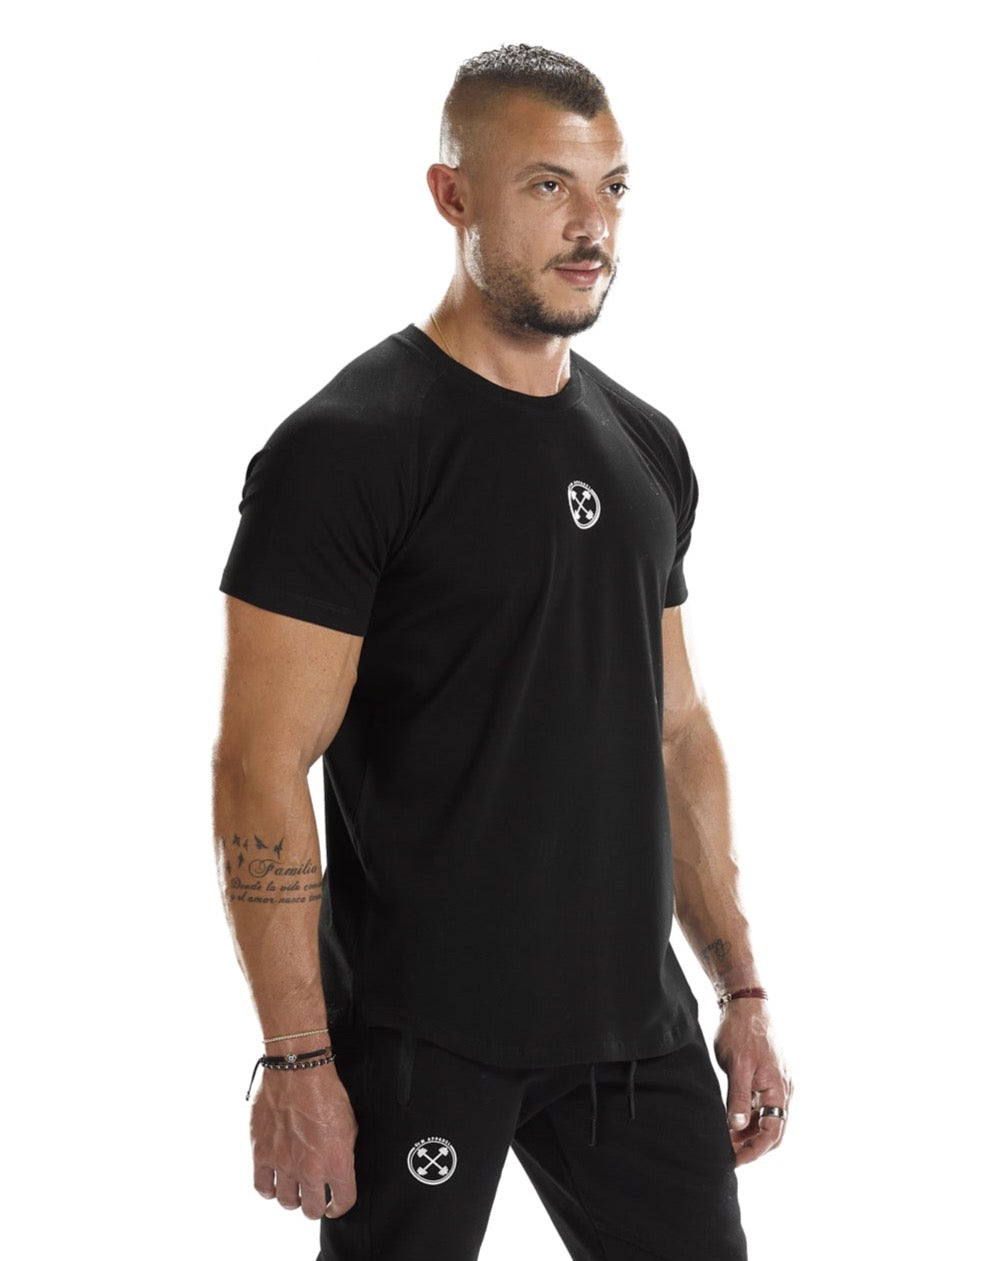 Bar-Basic Raglan T-shirt [Cotton] - T-Shirt - Gym Apparel Egypt